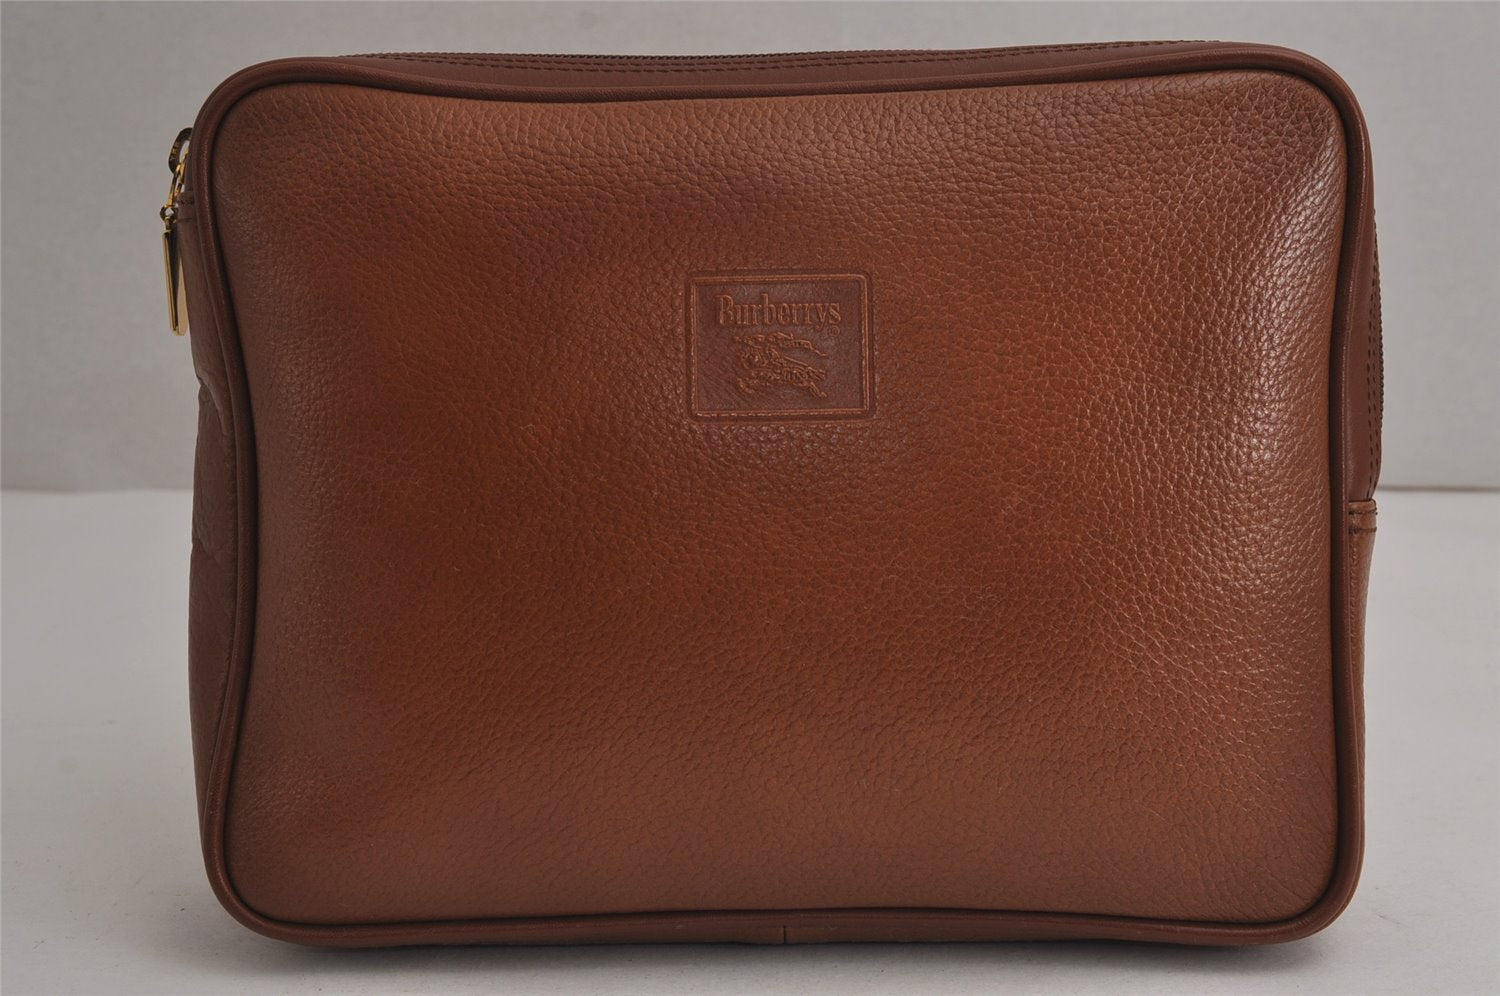 Authentic Burberrys Vintage Leather Clutch Hand Bag Purse Brown 8051J